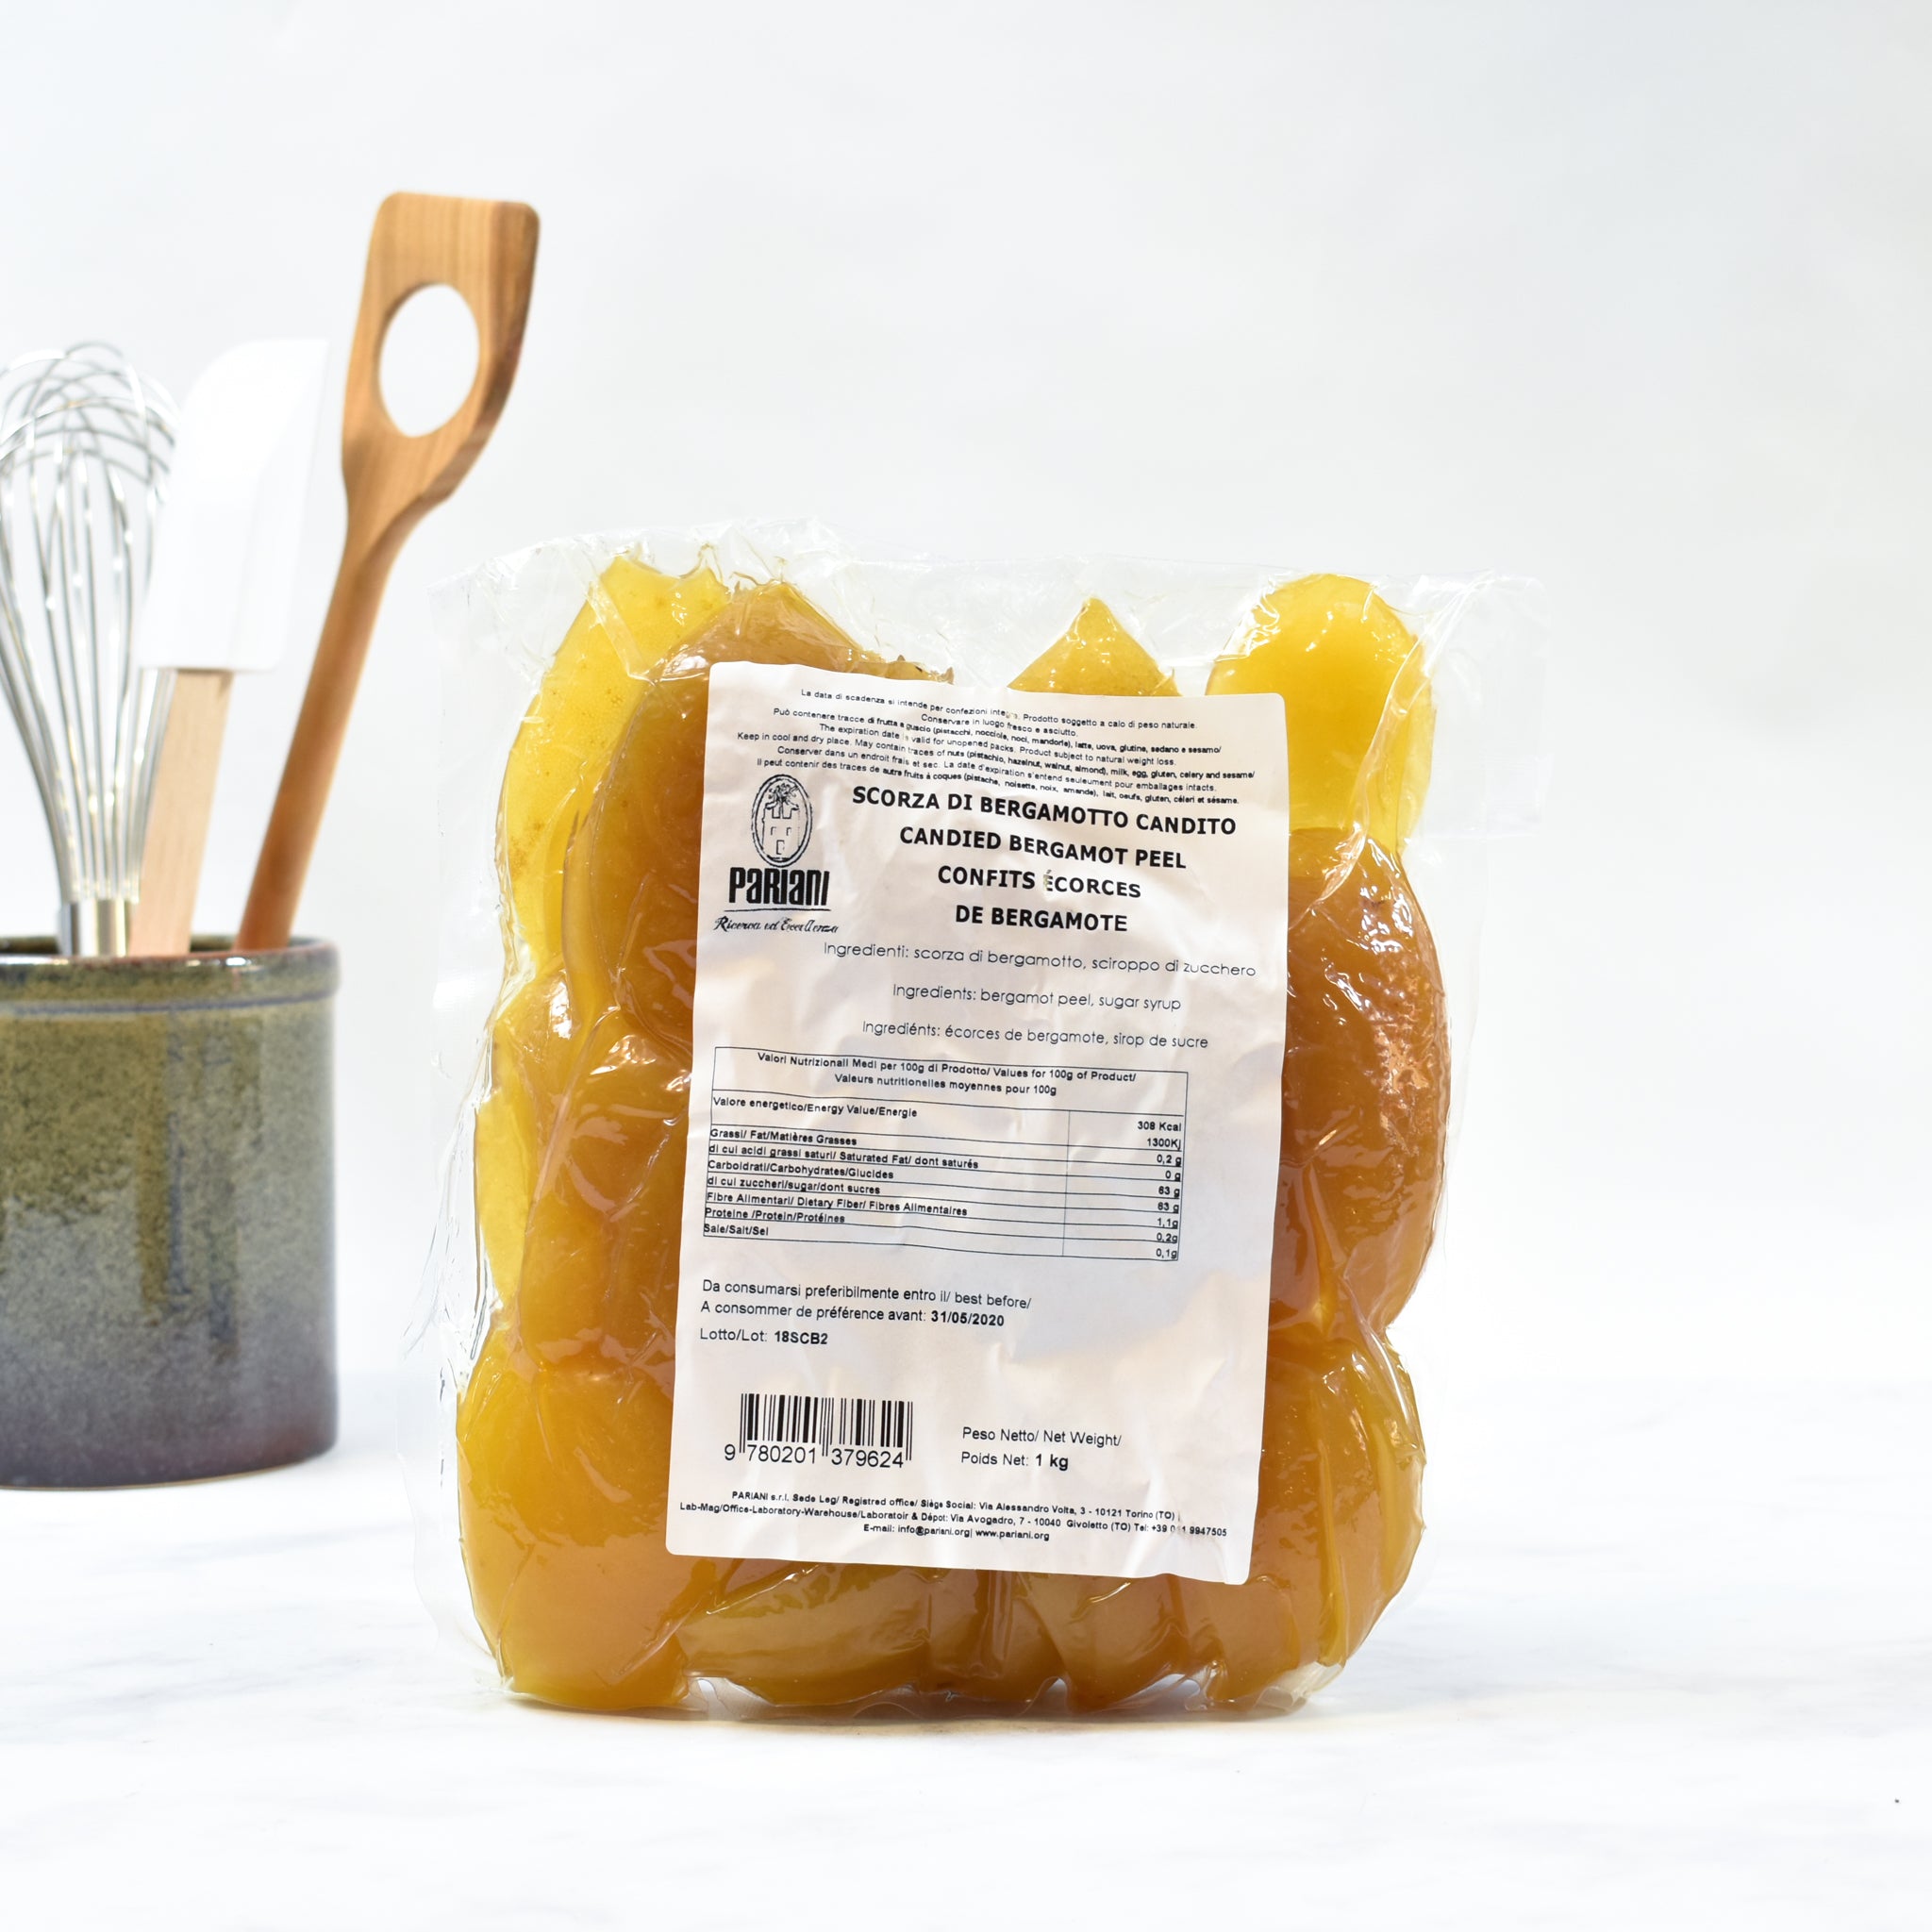 Calabrian Candied Bergamot Peel, 1kg